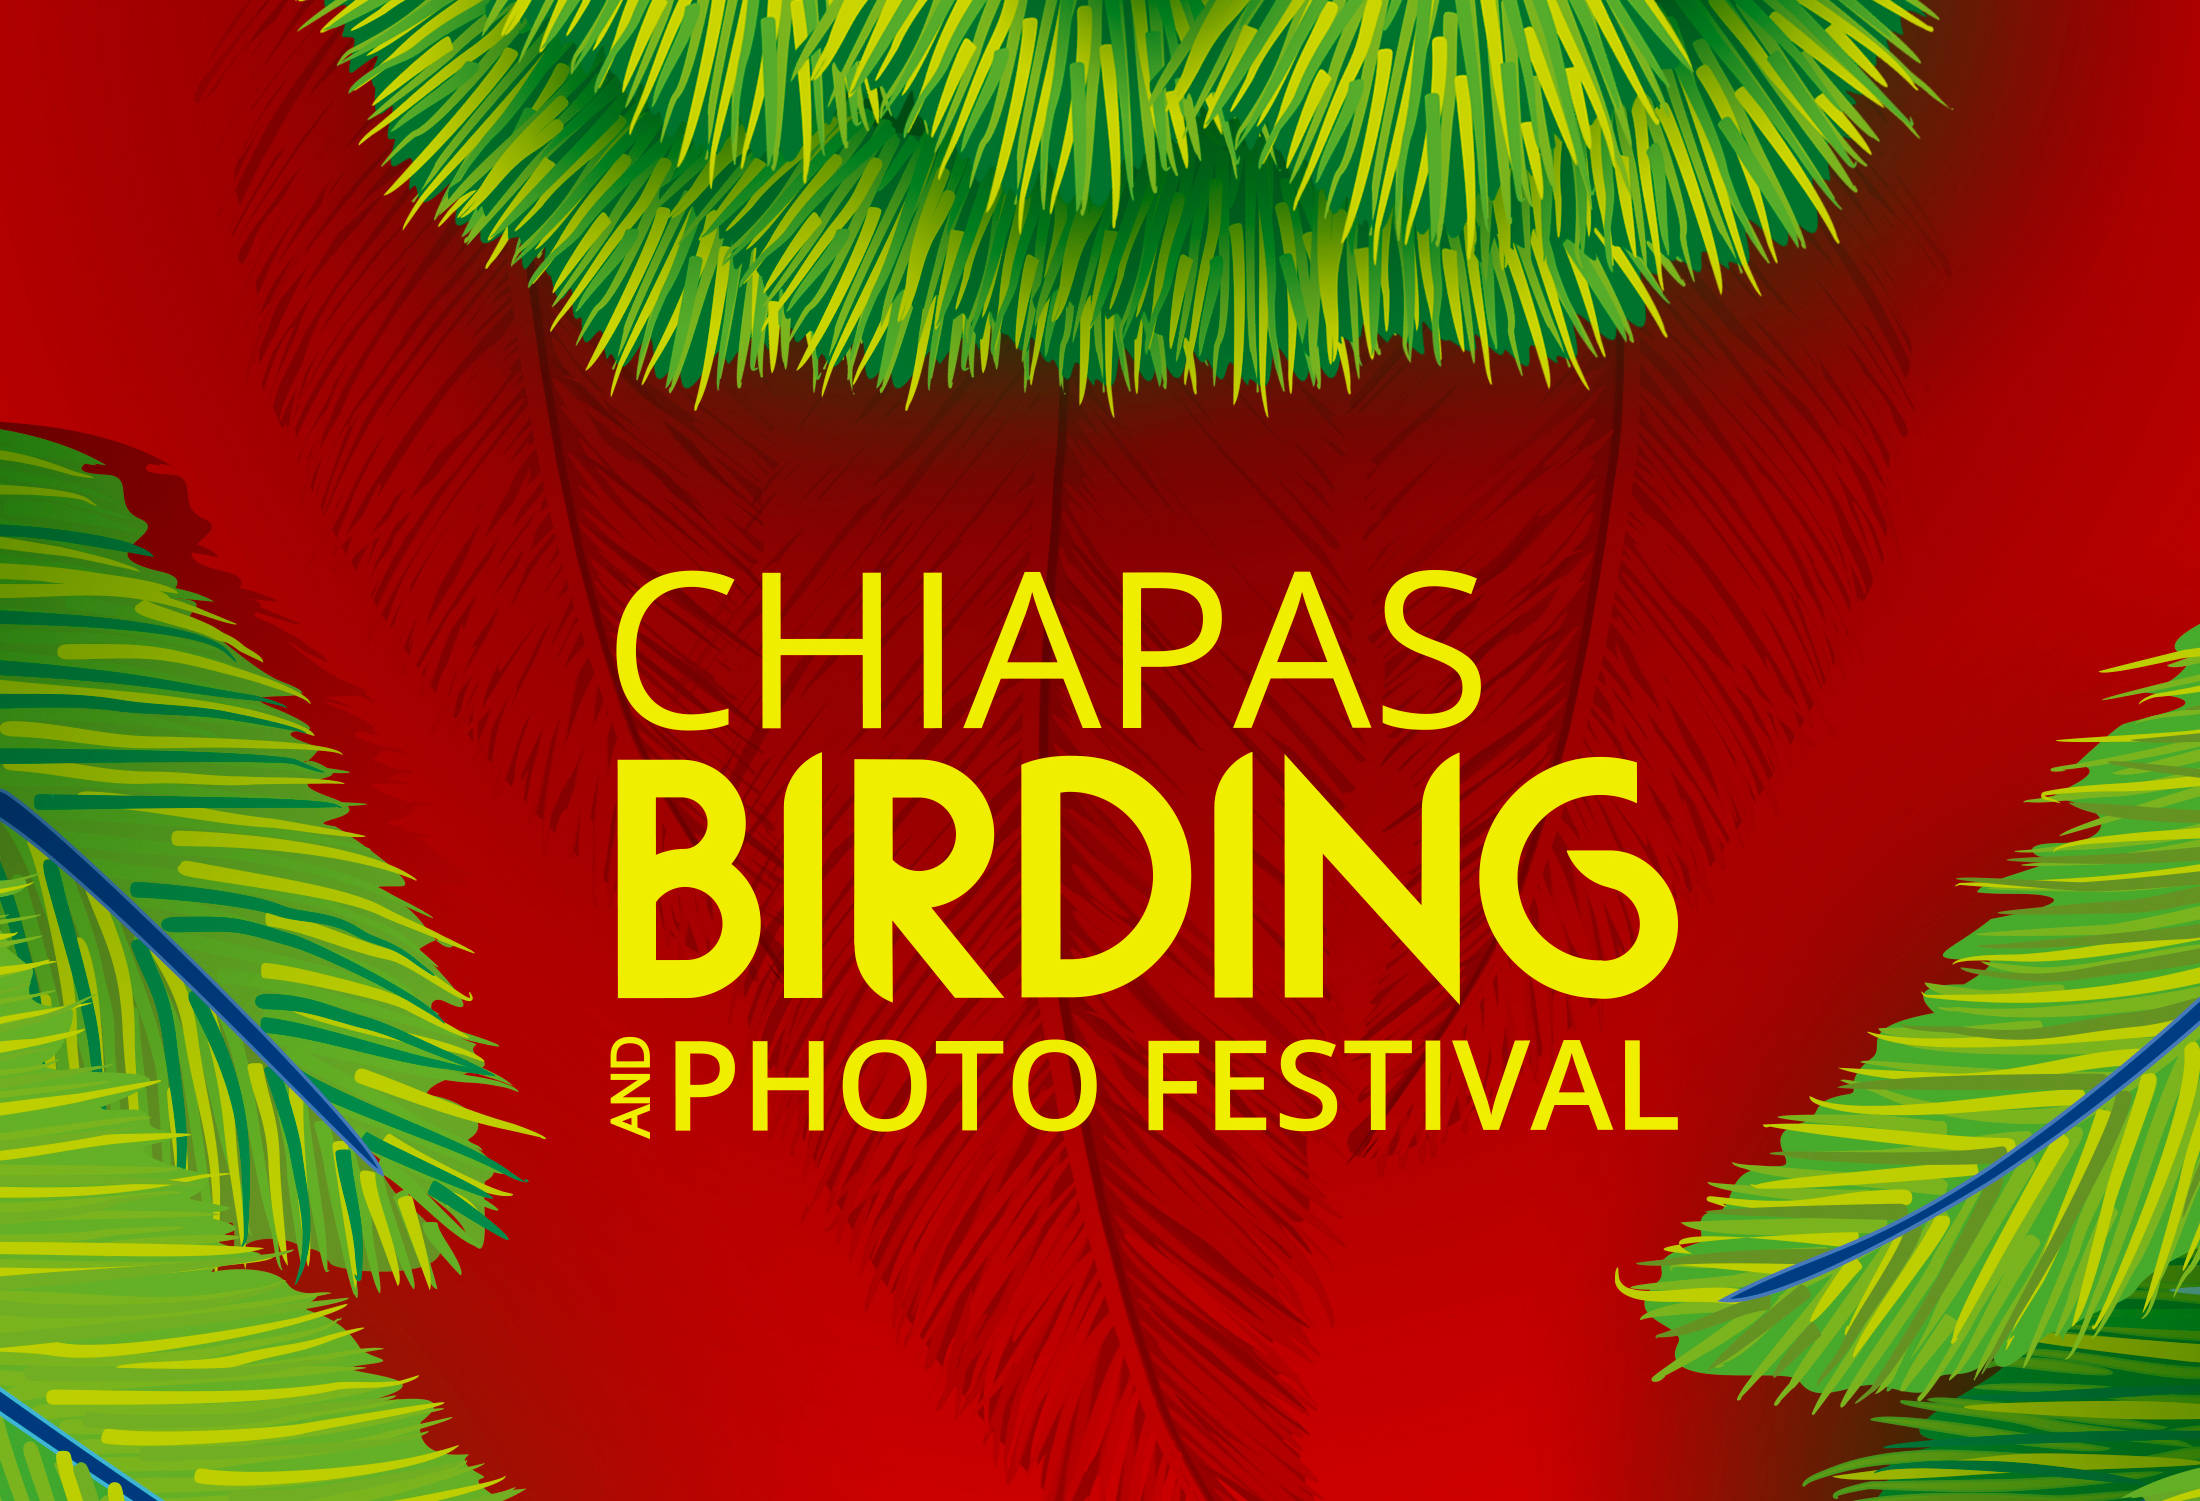 CHIAPAS BIRDING